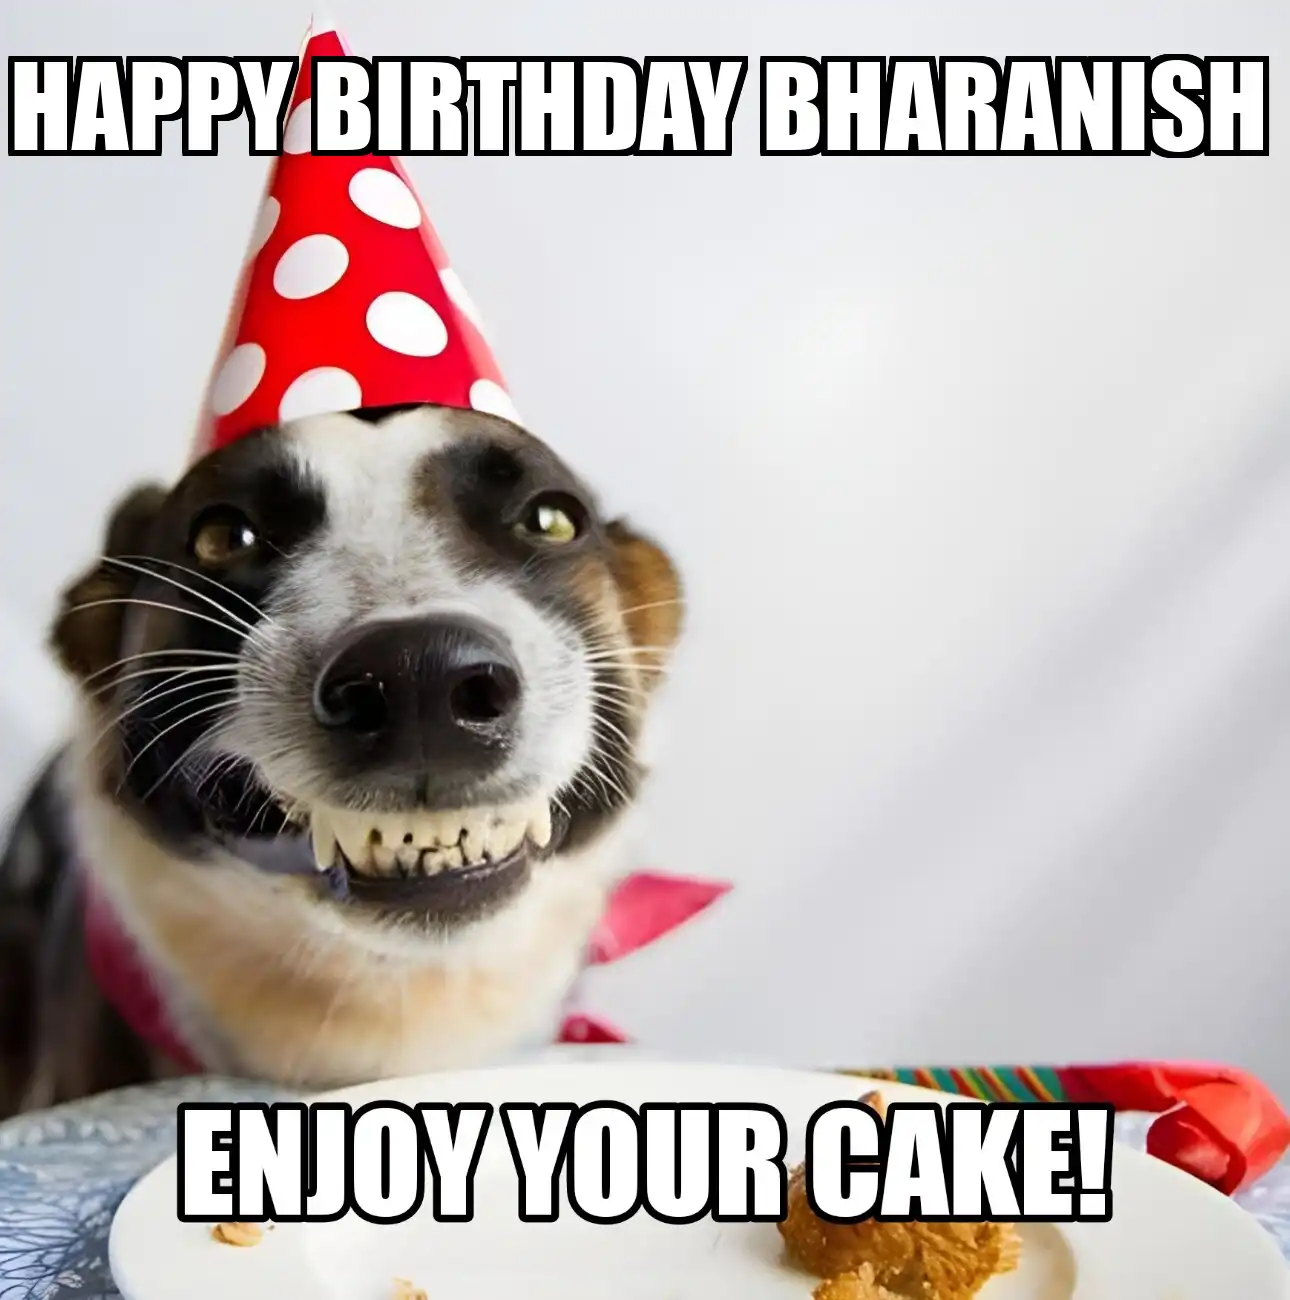 Happy Birthday Bharanish Enjoy Your Cake Dog Meme